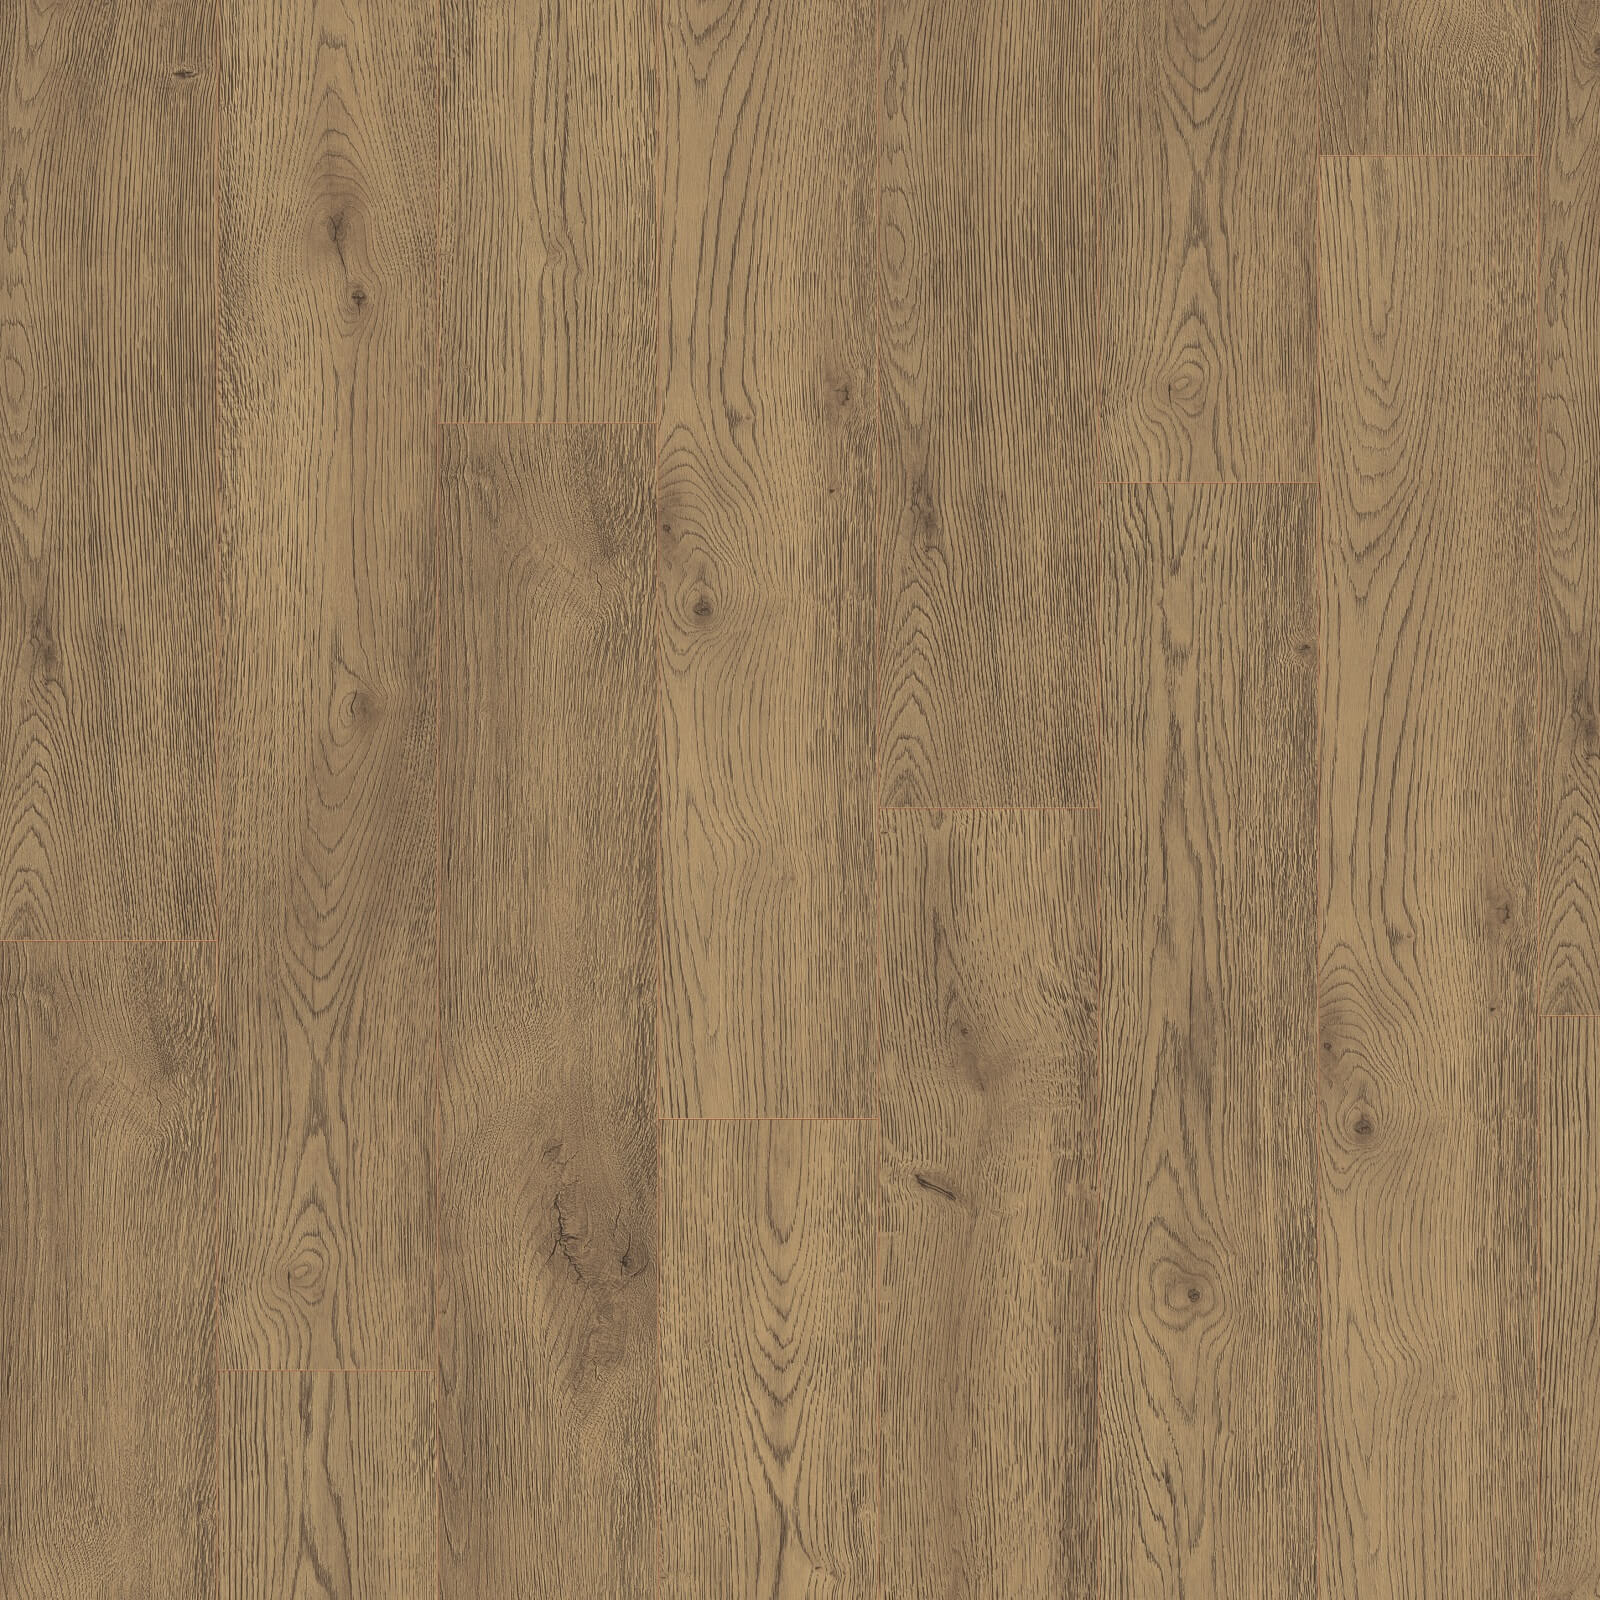 Natural Roanne Oak Laminate Flooring